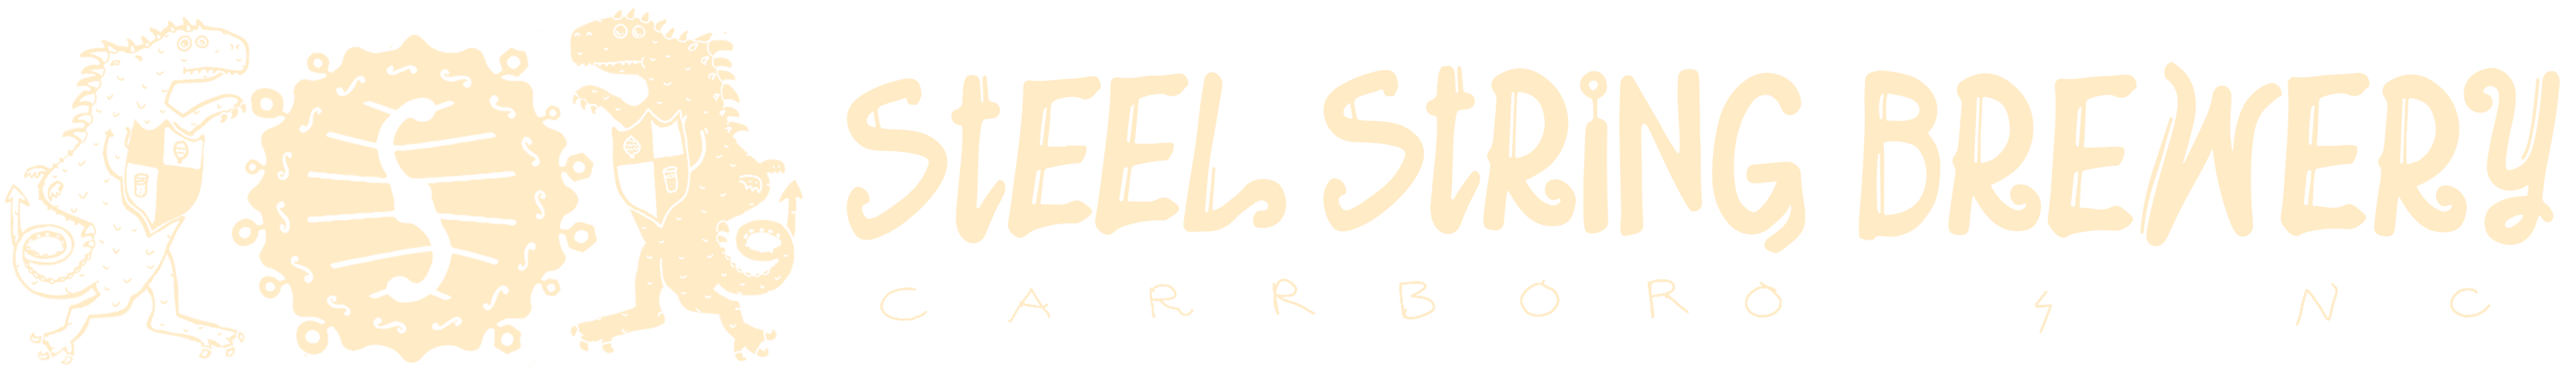 Steel String Brewery